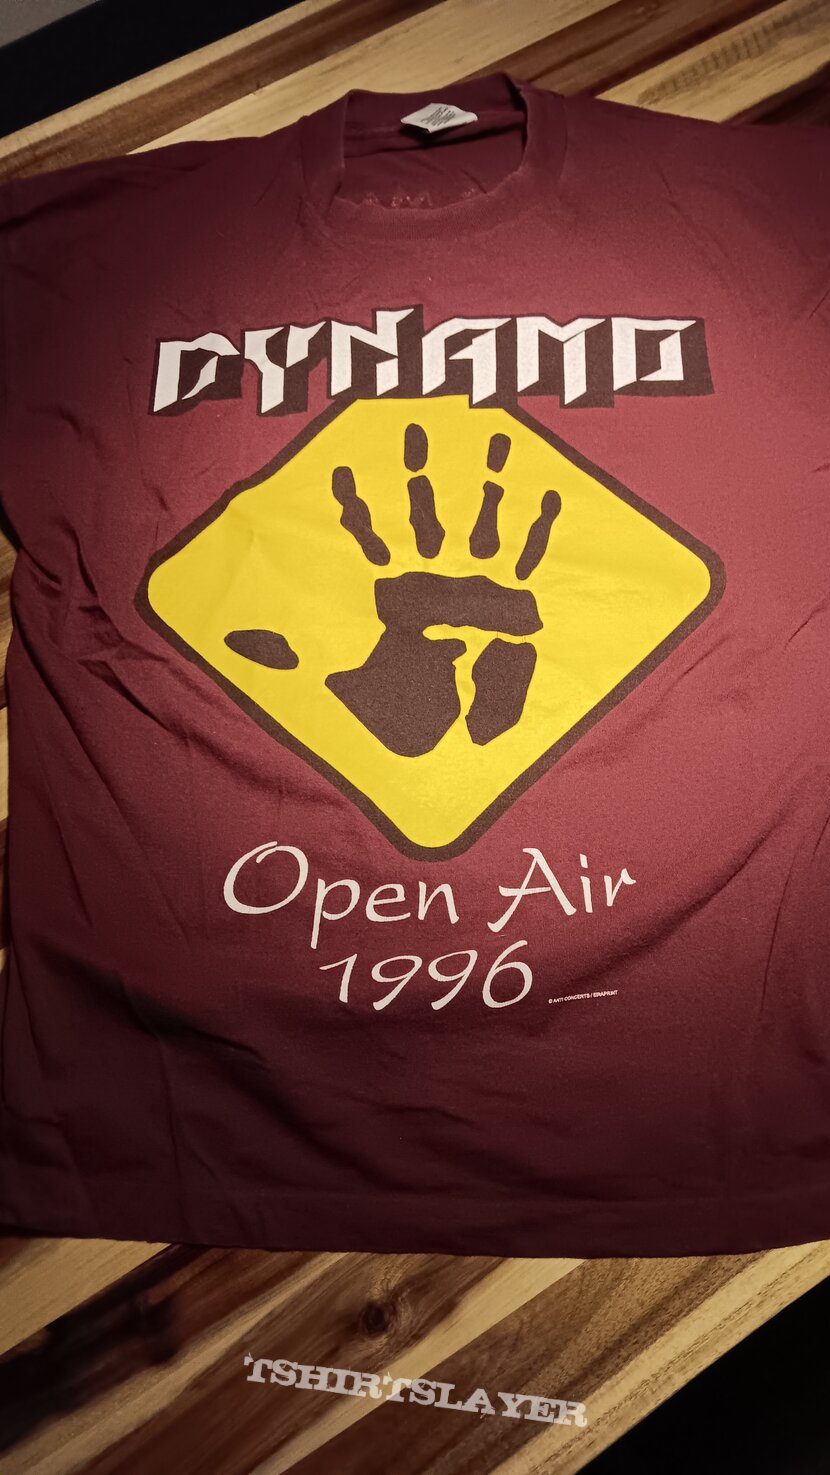 Dynamo Open Air 96